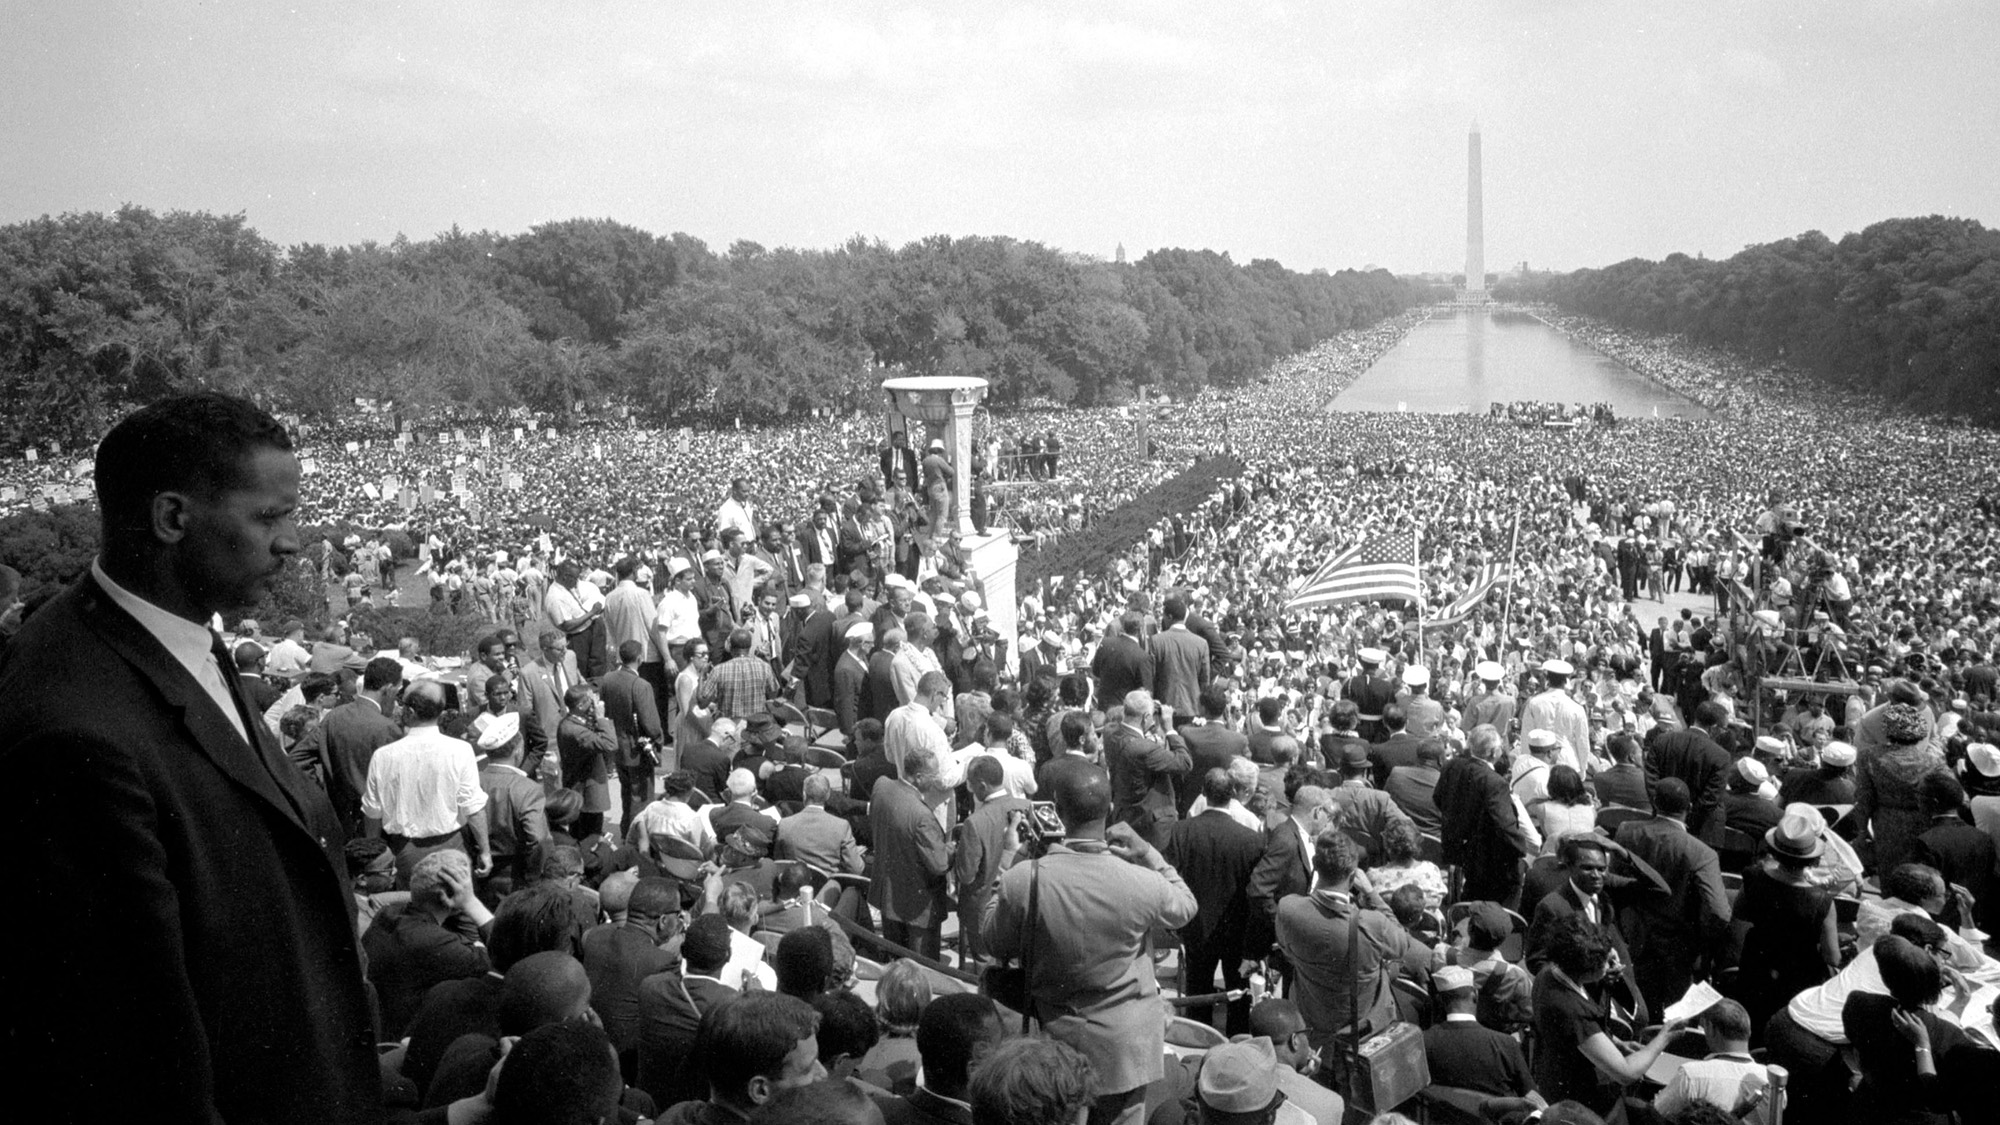 March on Washington black and white photo.